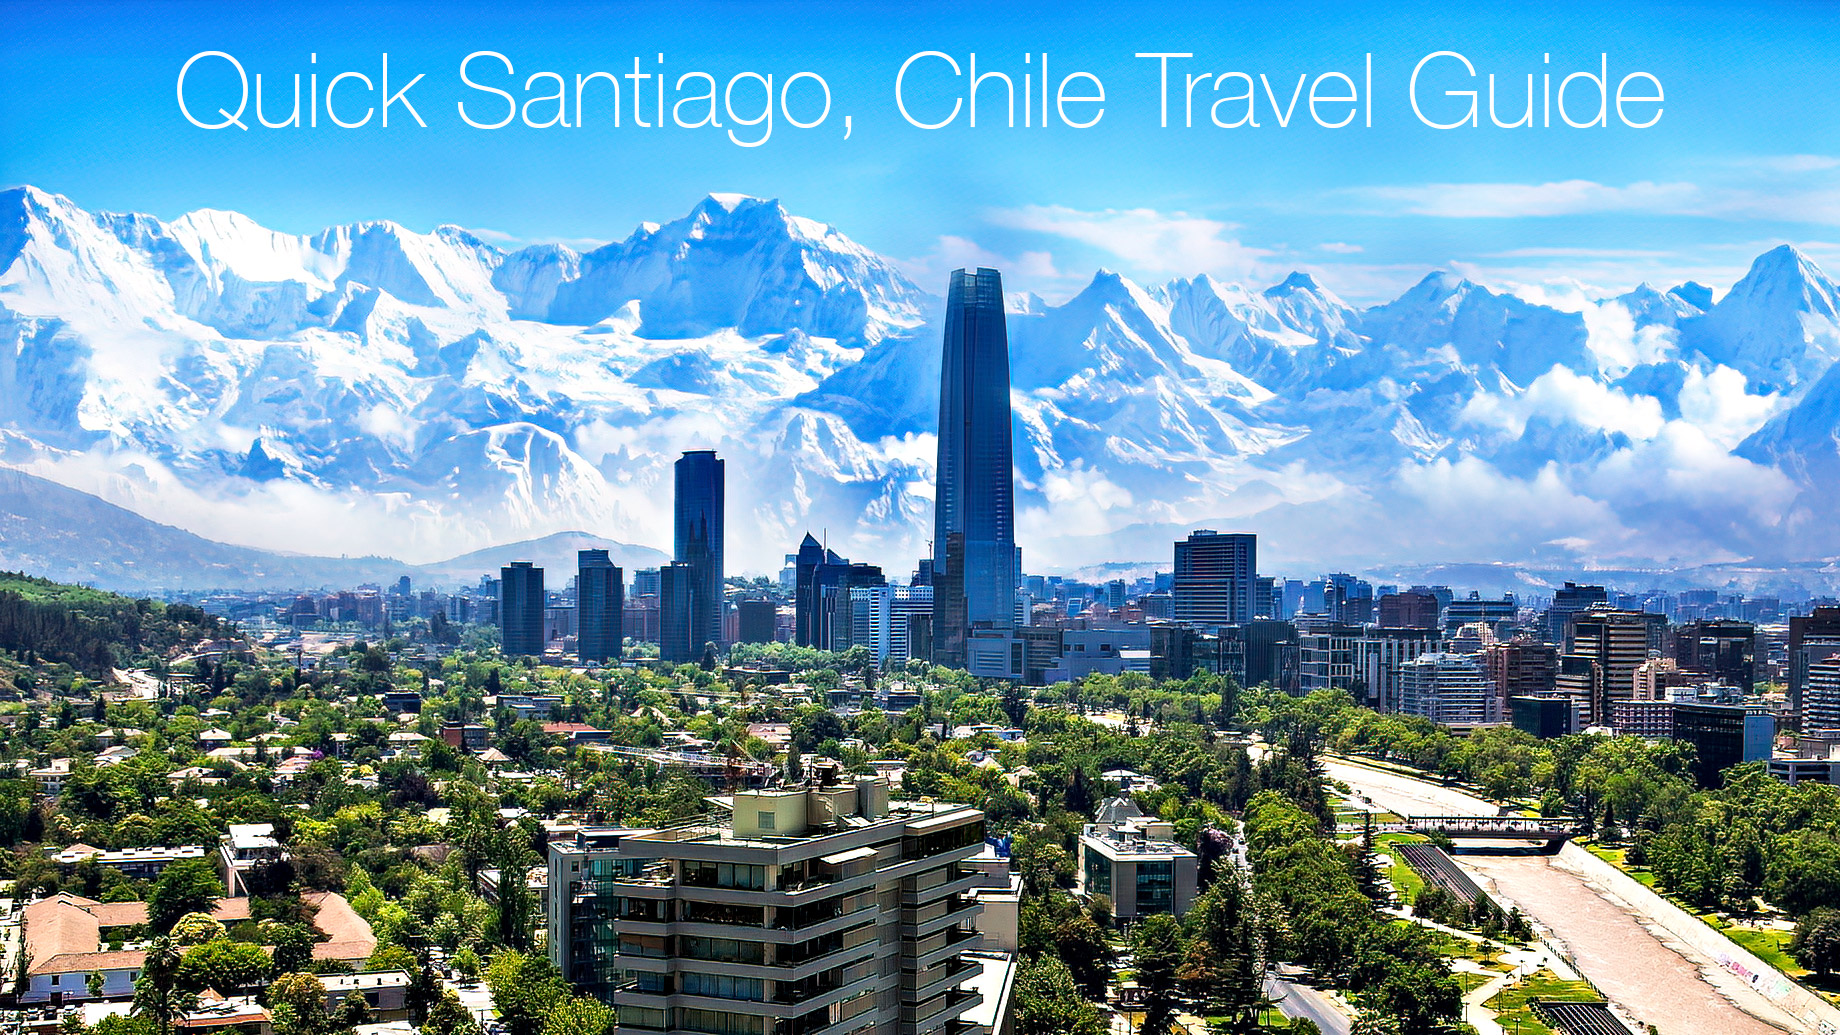 Quick Santiago, Chile Travel Guide